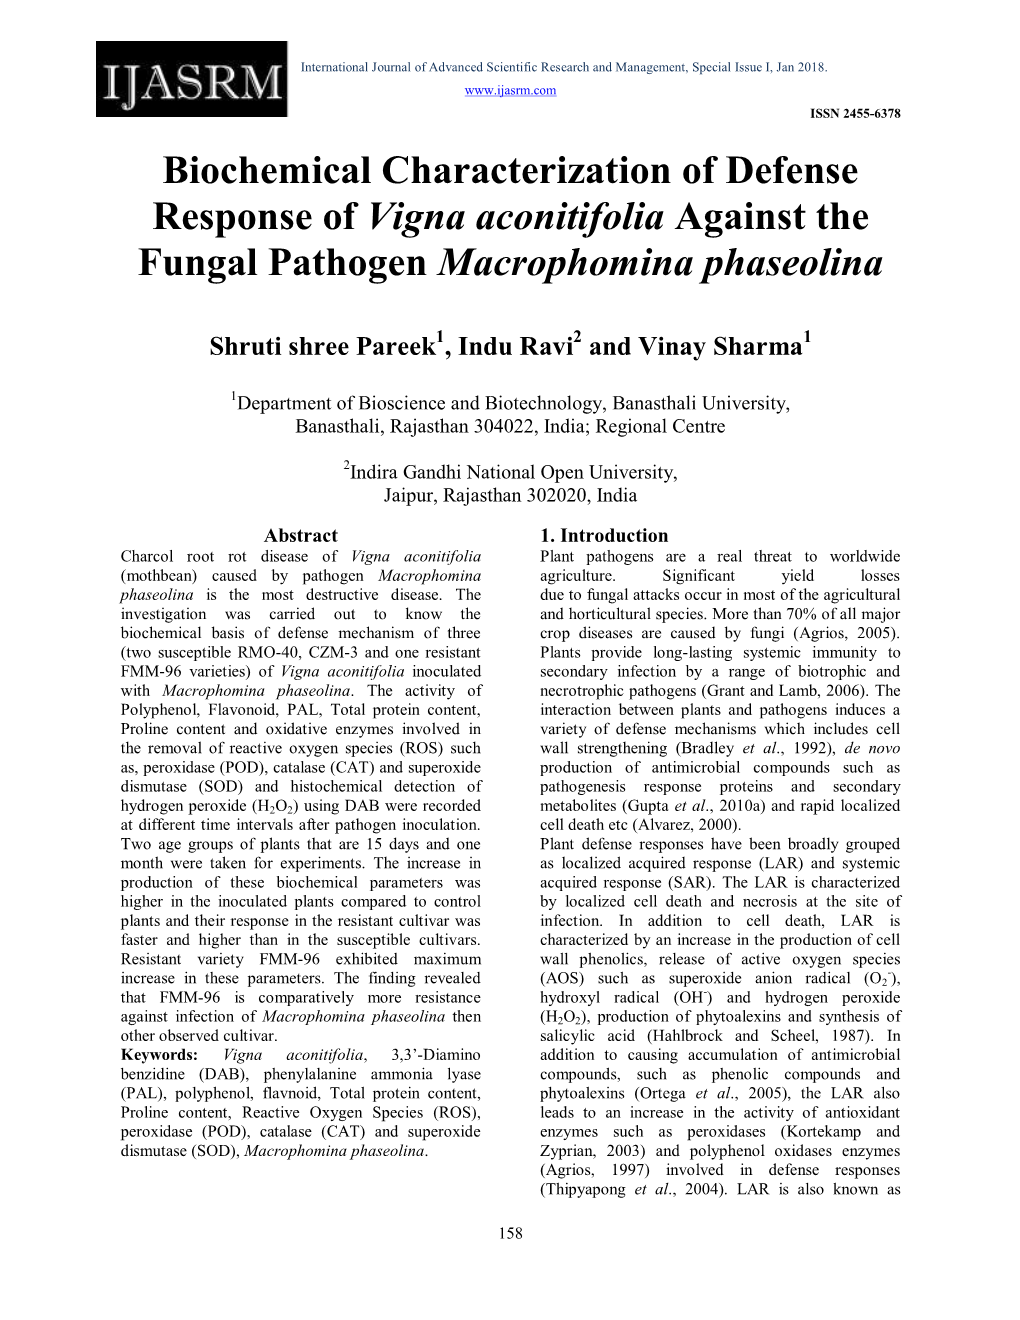 Biochemical Characterization of Defense Response of Vigna Aconitifolia Against the Fungal Pathogen Macrophomina Phaseolina